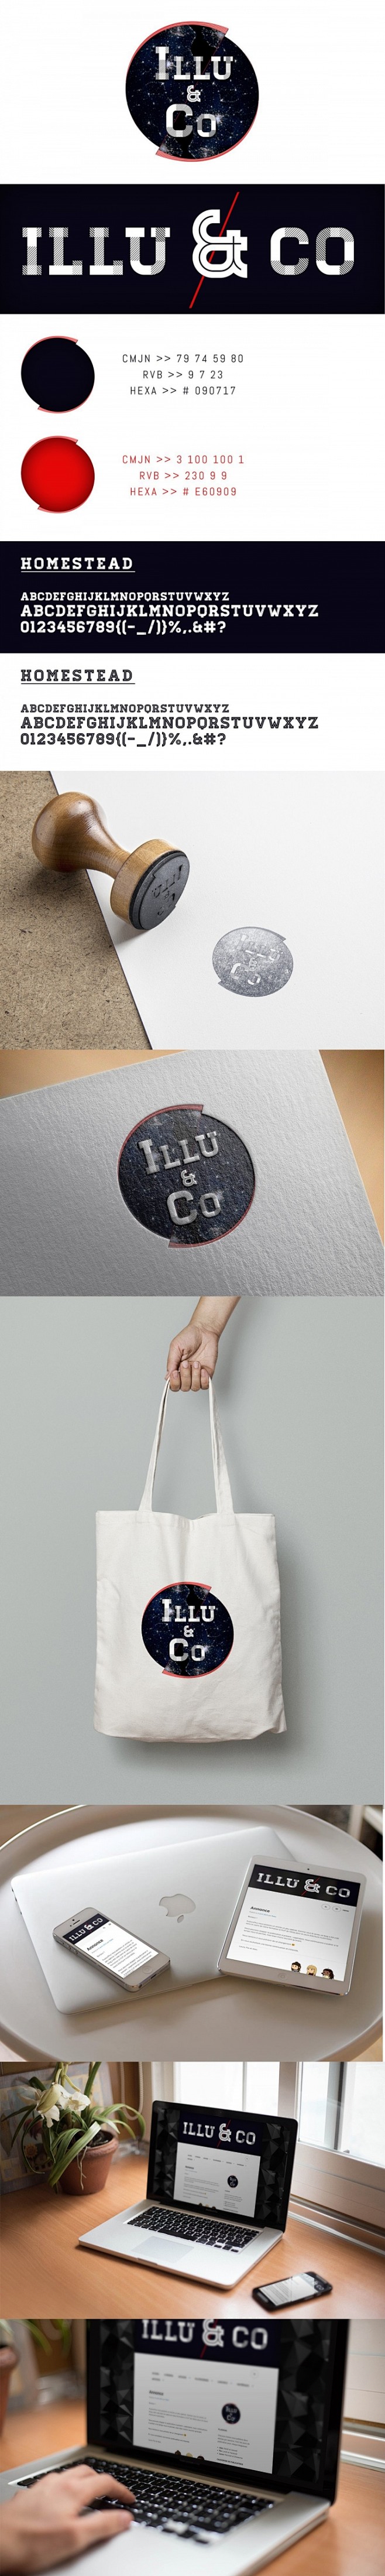 Illu & Co博客品牌形象设计